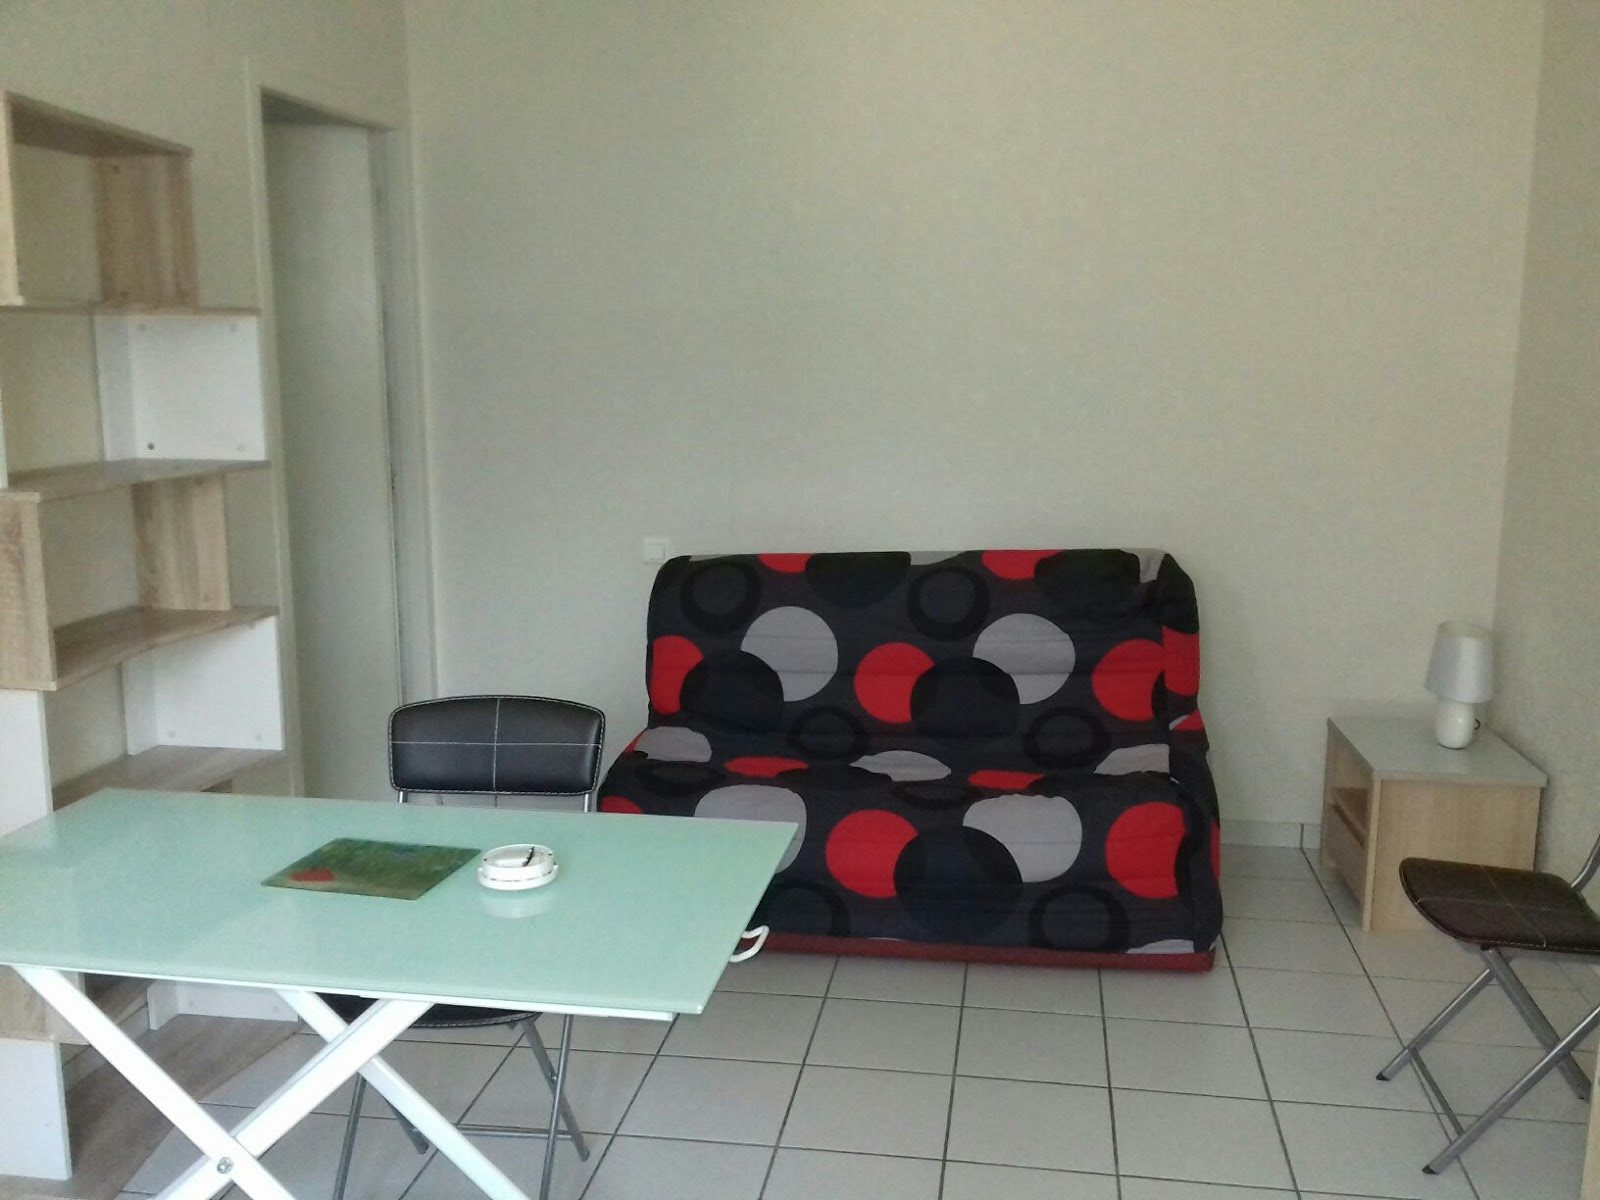 Location studio meublé 23 m2